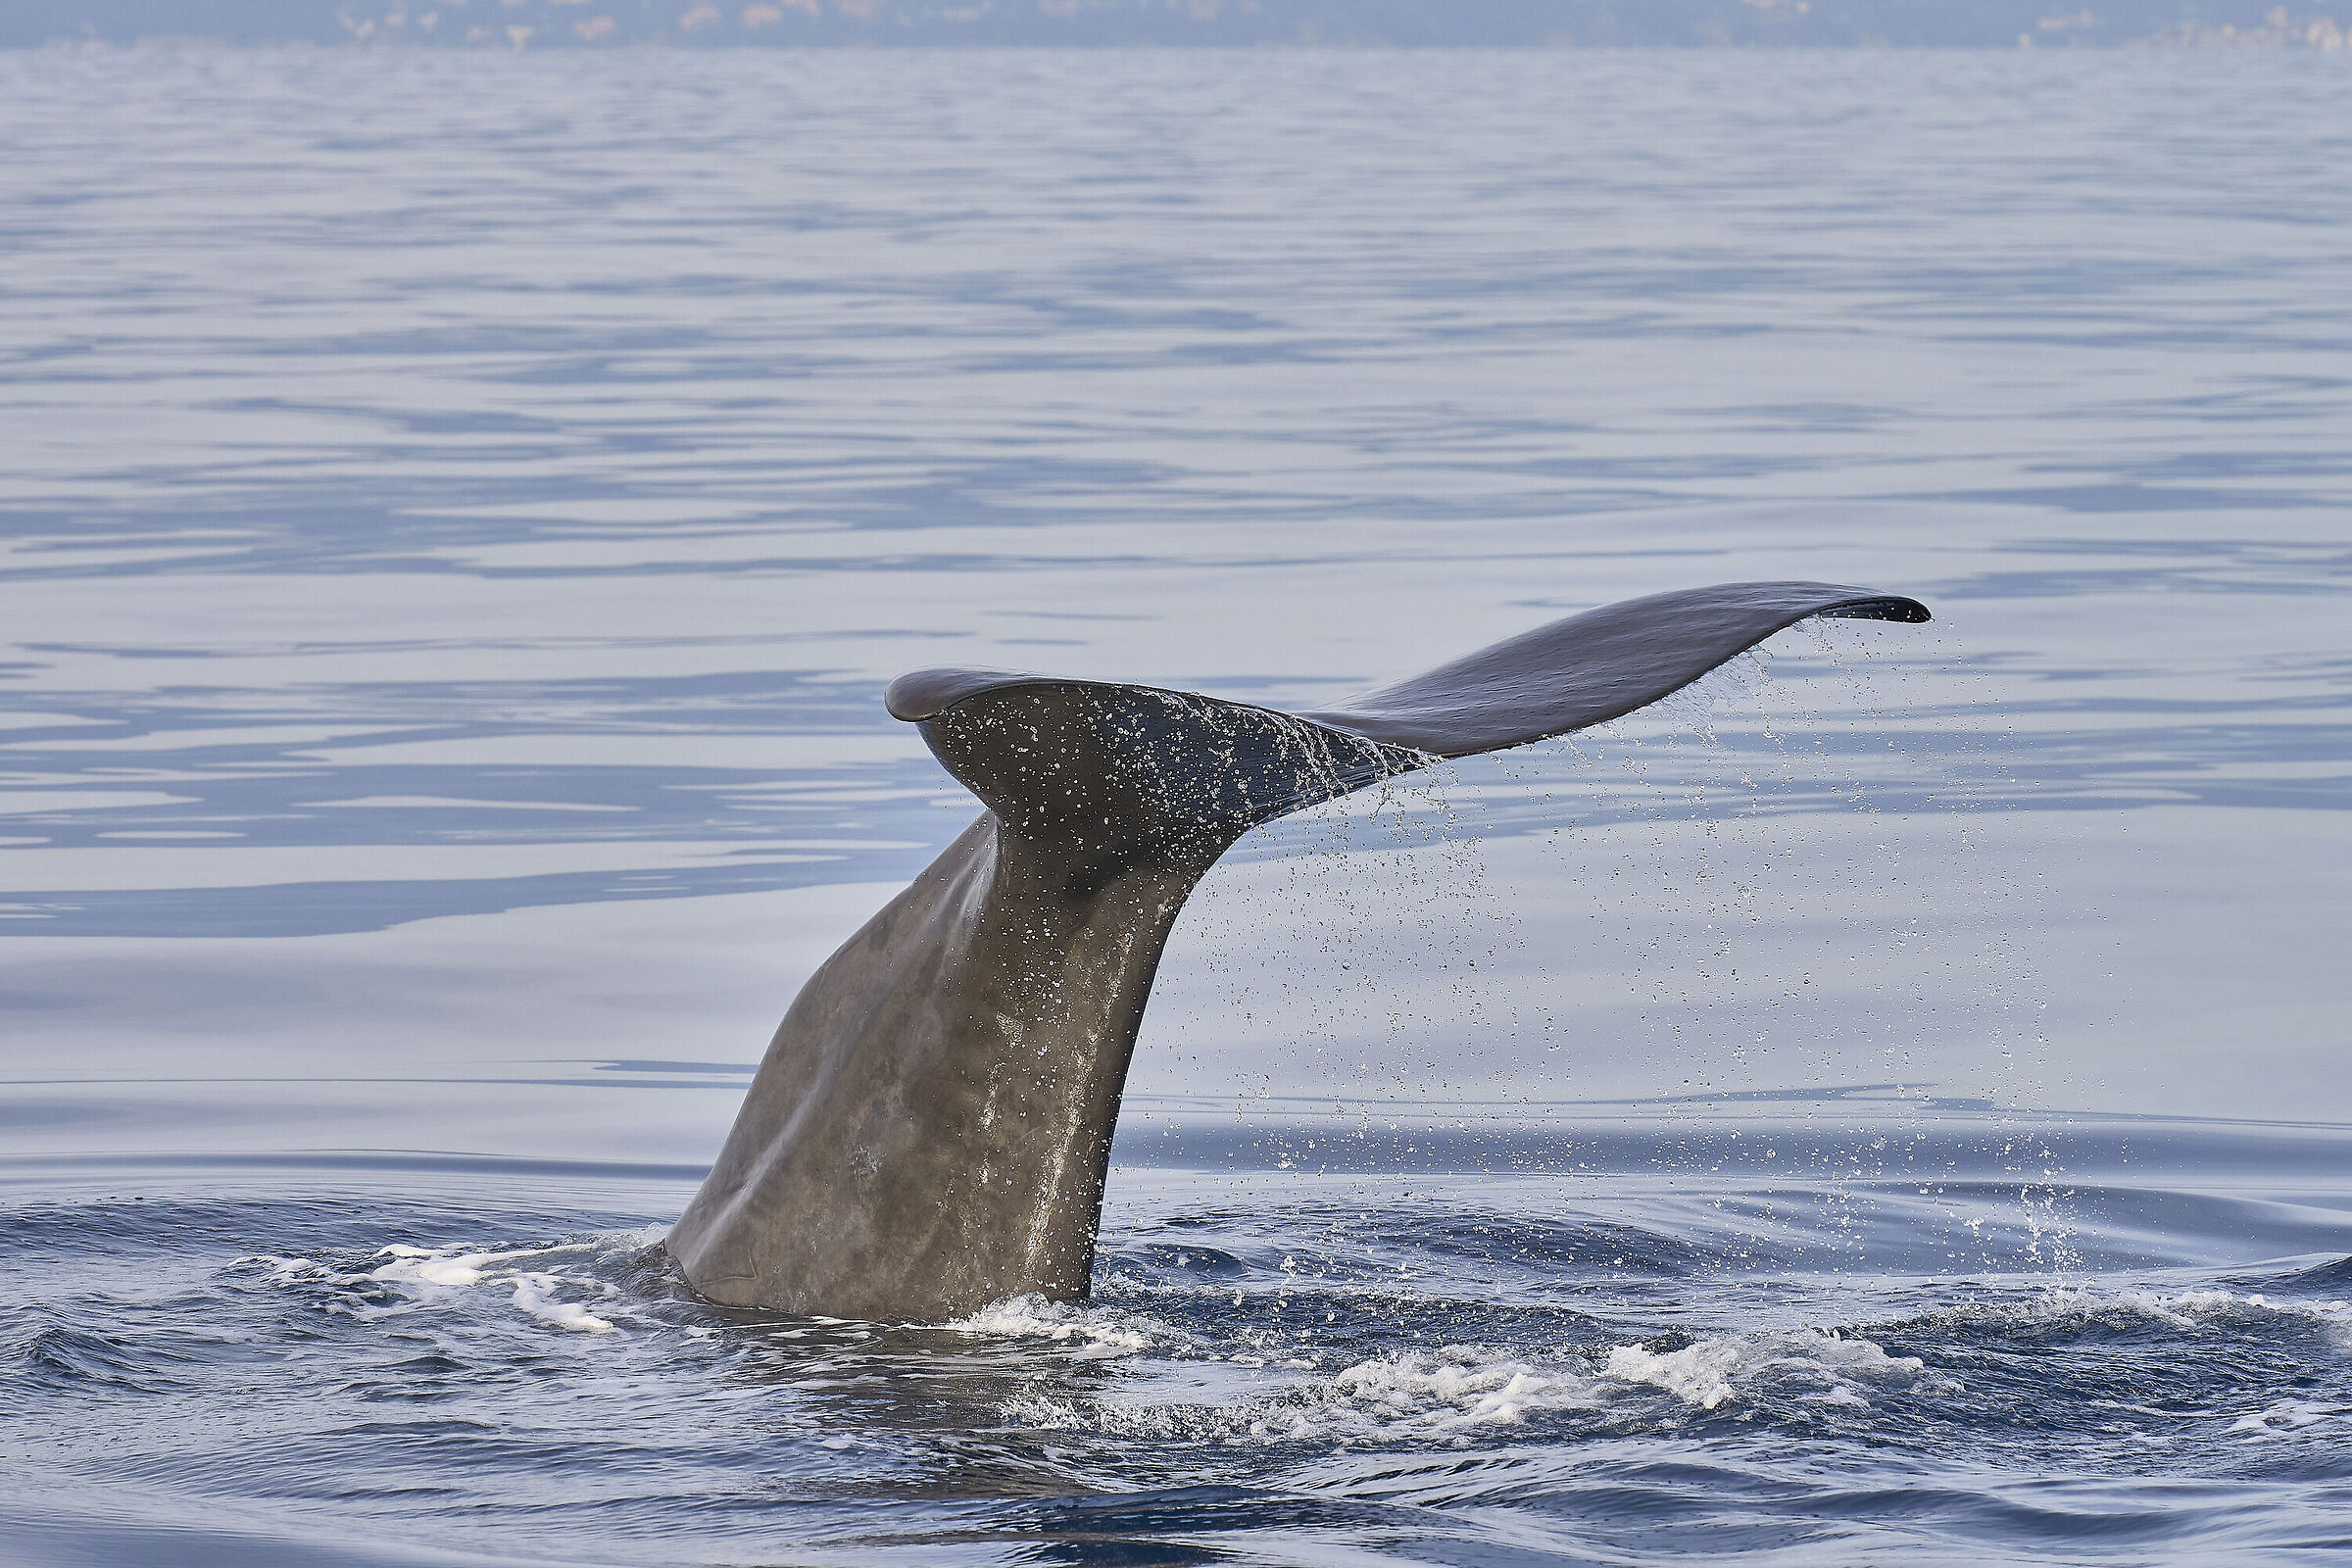 Ligurian sperm whale...